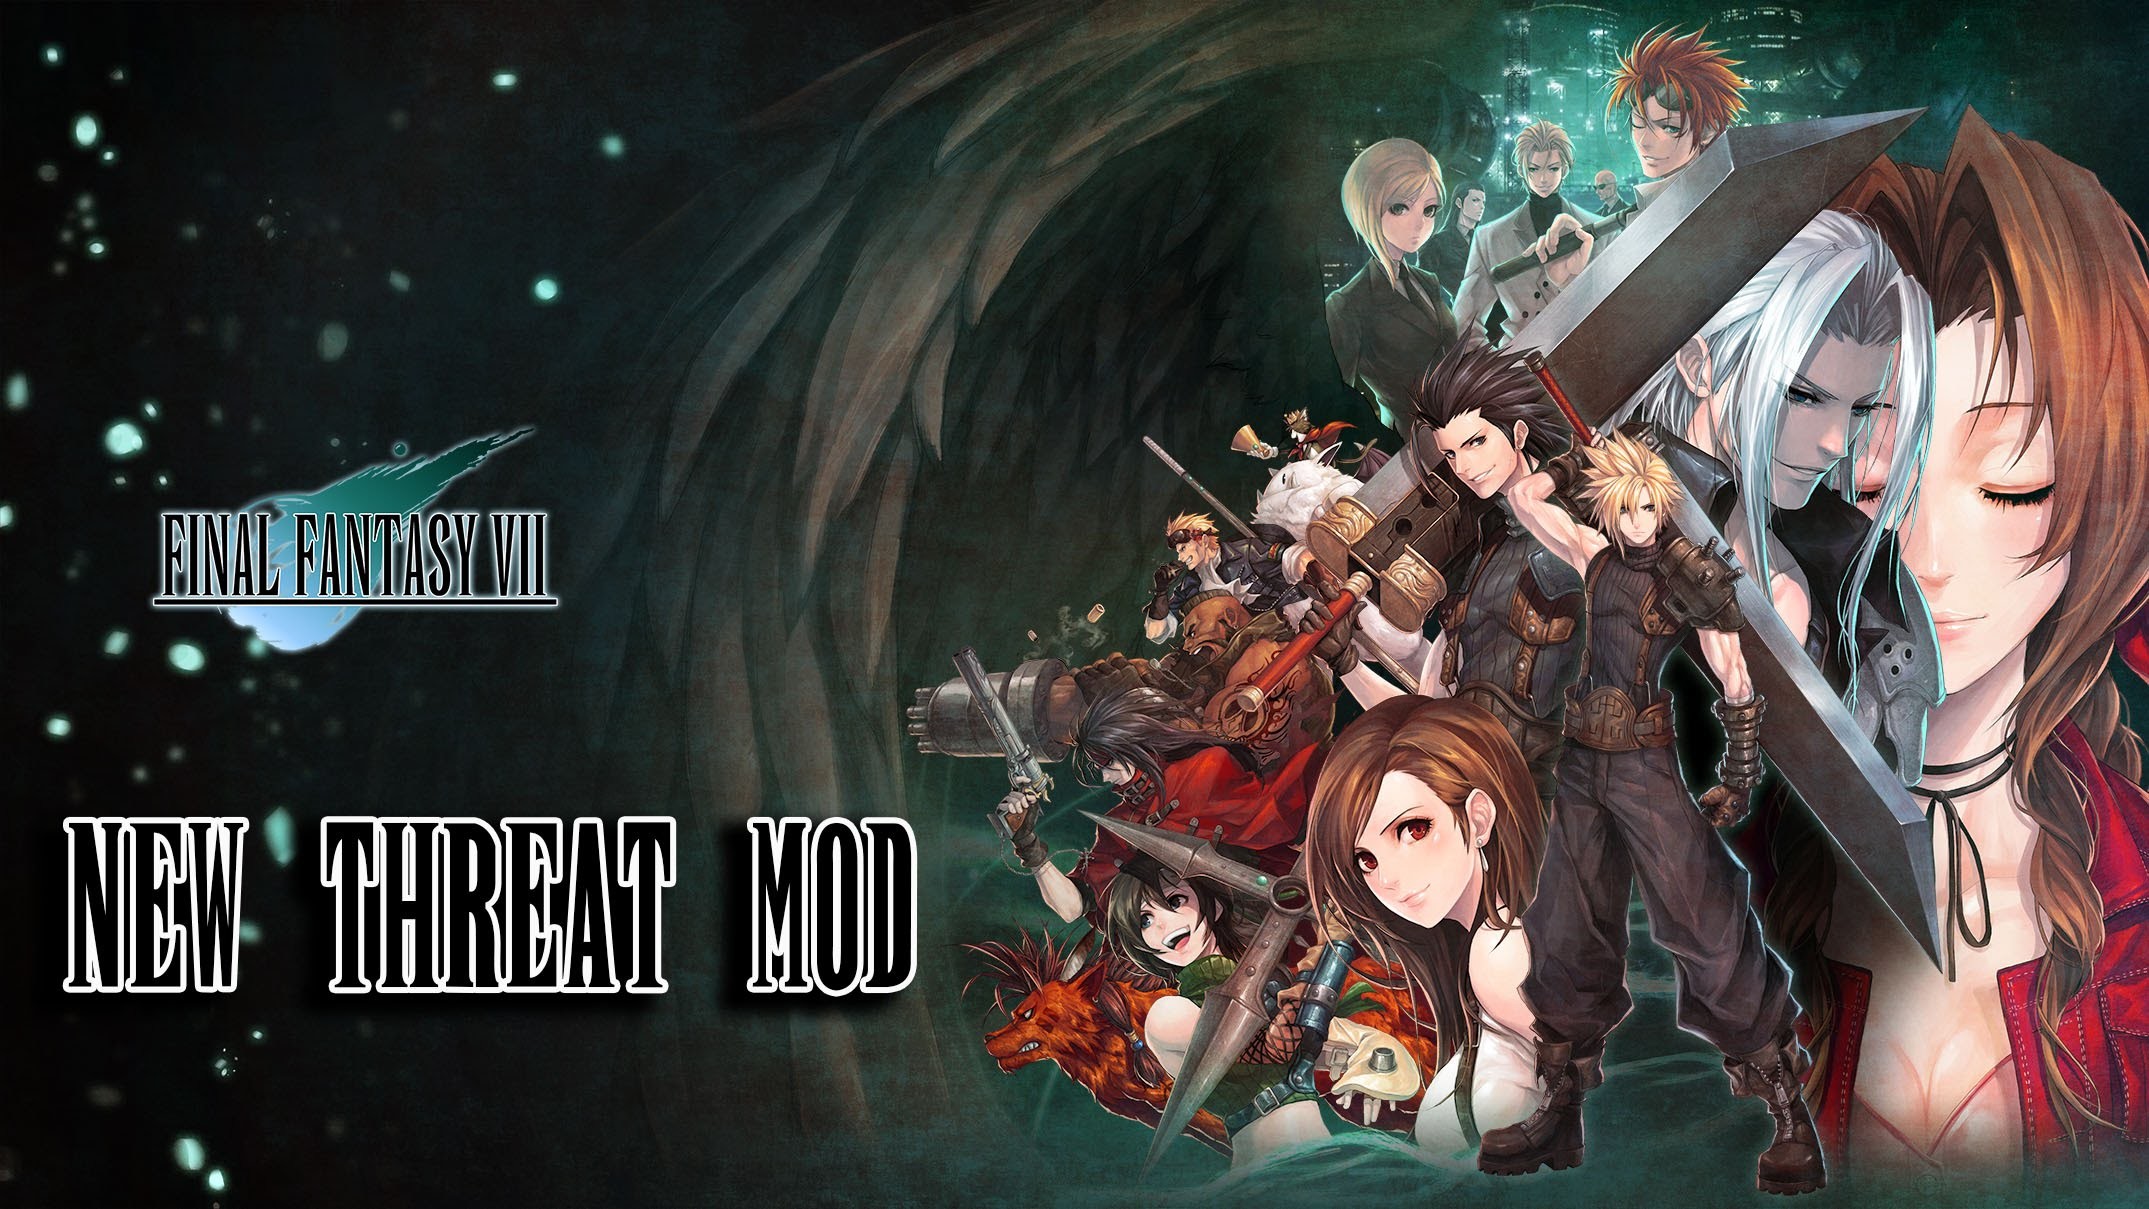 2149x1209 Final Fantasy VII New Threat mod - YouTube